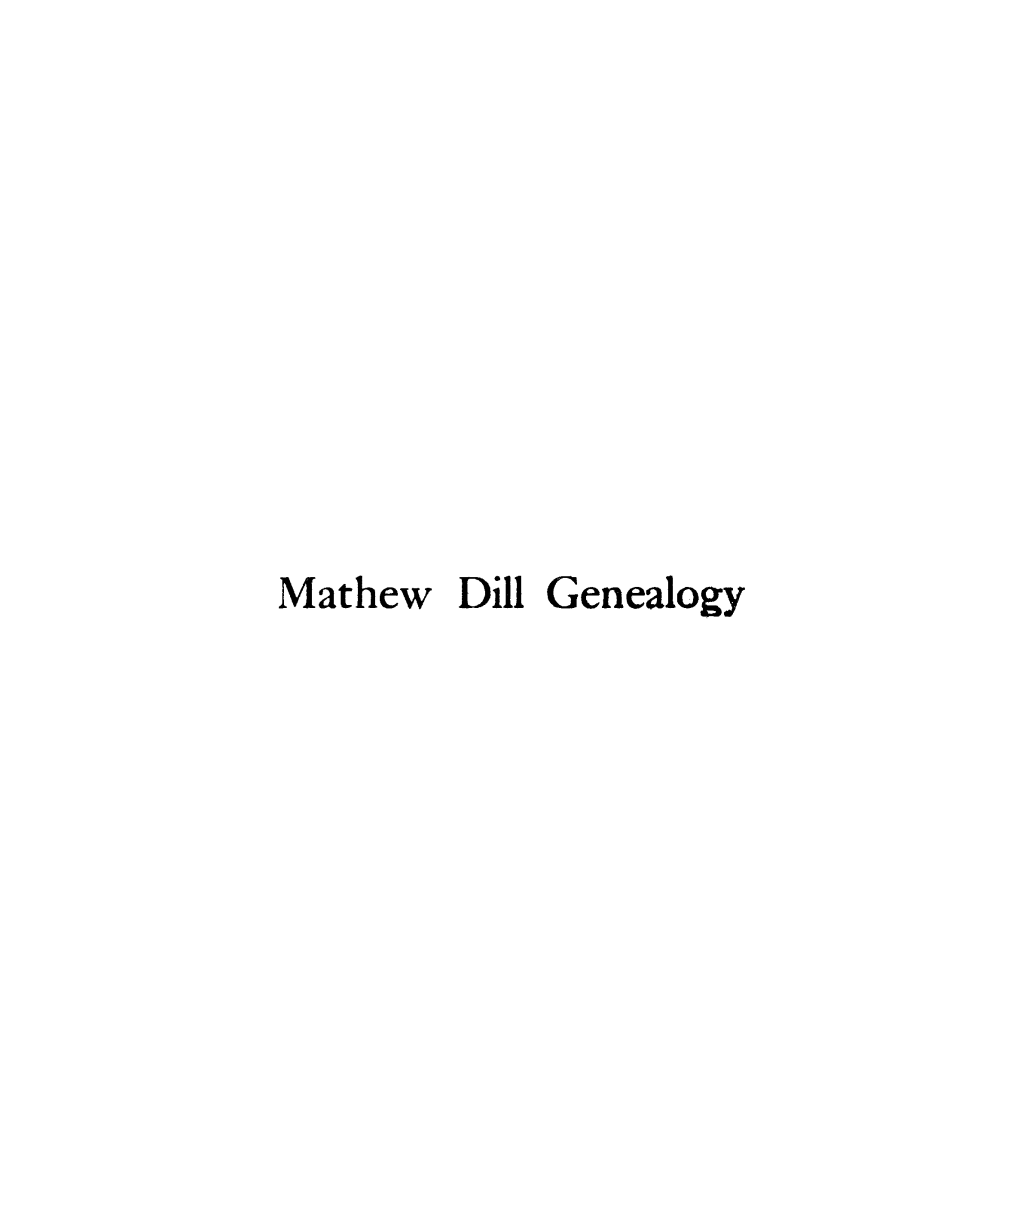 Mathew Dill Genealogy